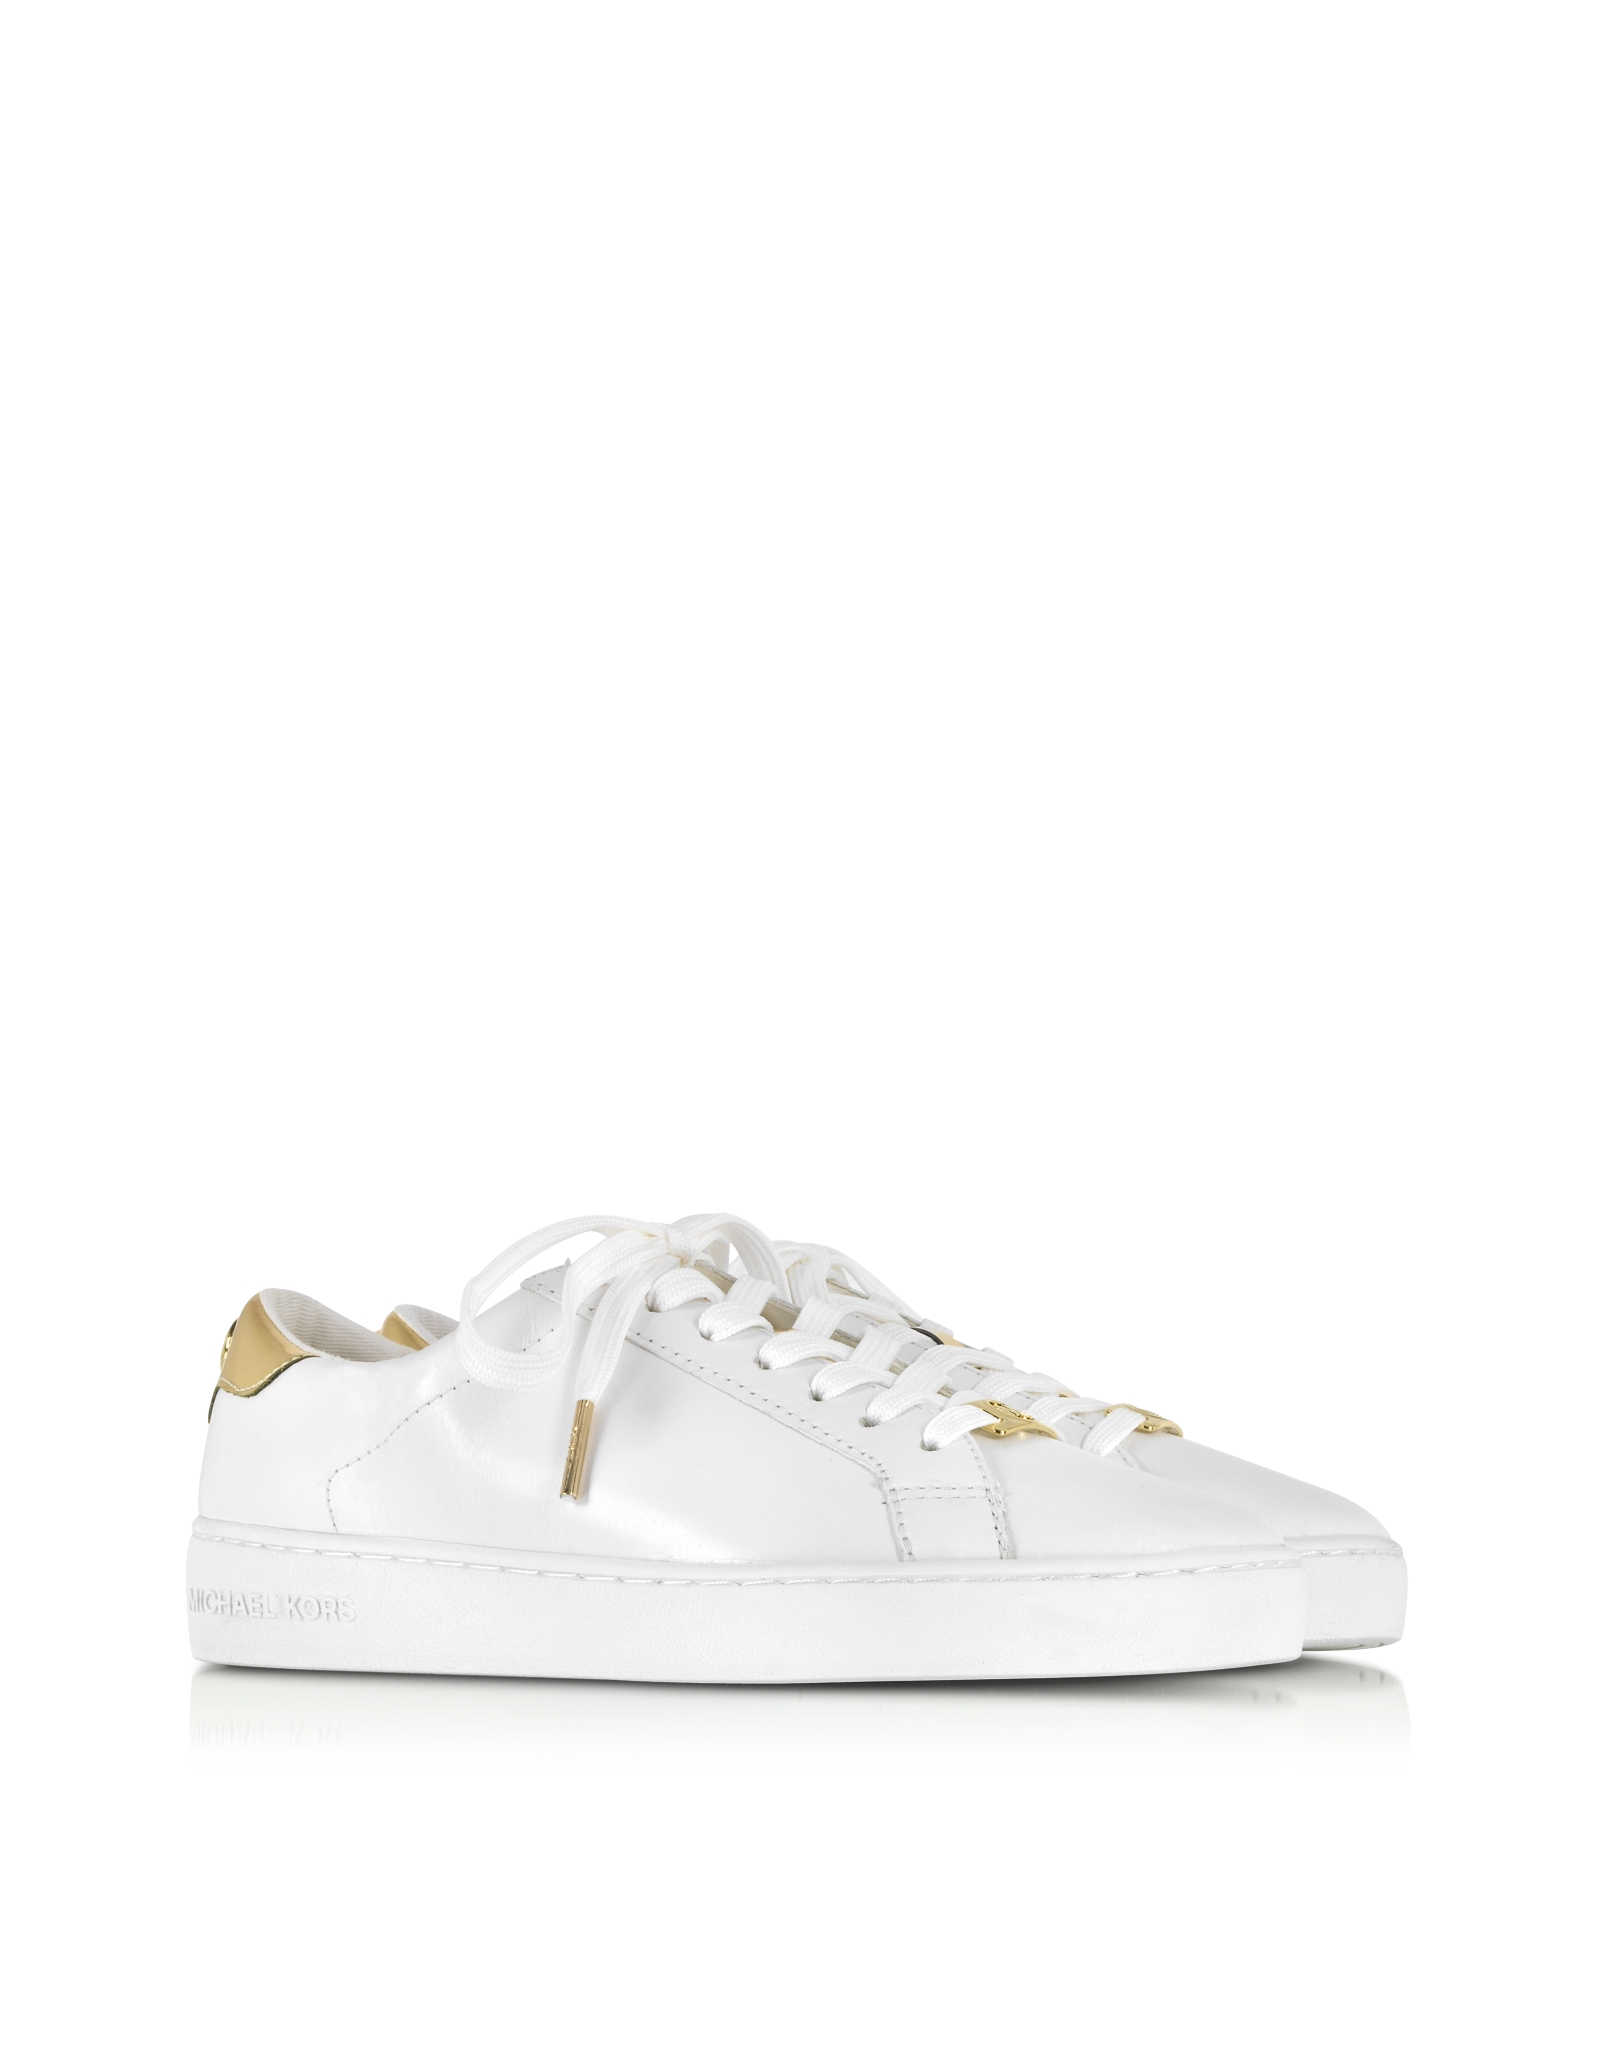 Lyst - Michael Kors Irving White/Gold Leather Sneaker in White